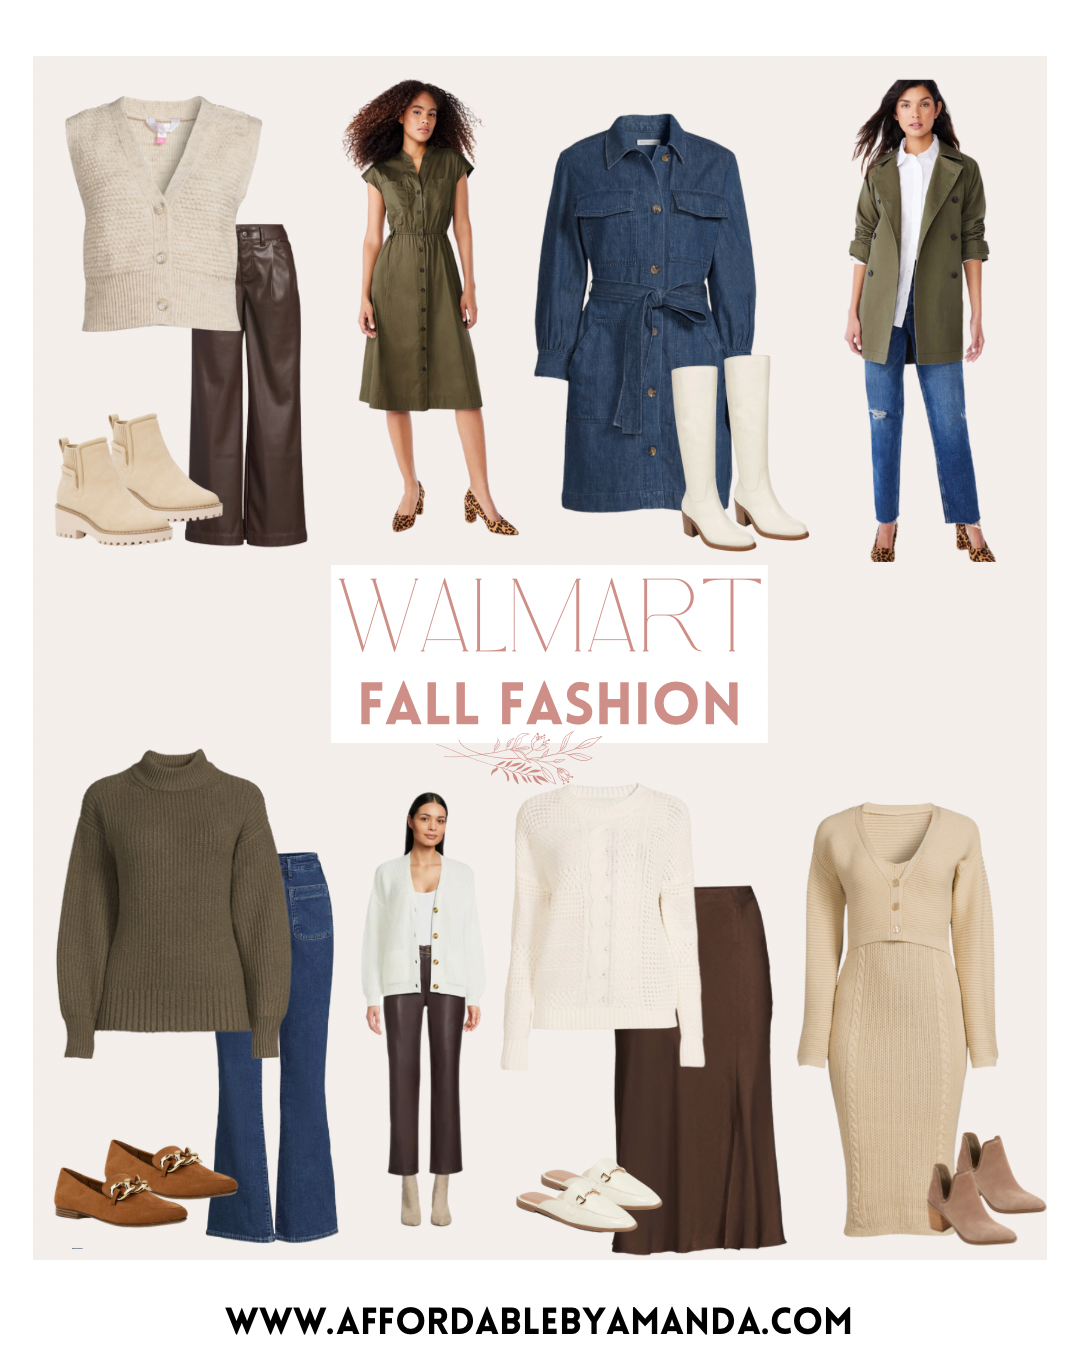 Walmart Fall Try On Clothing Haul 2023 - Affordable by Amanda